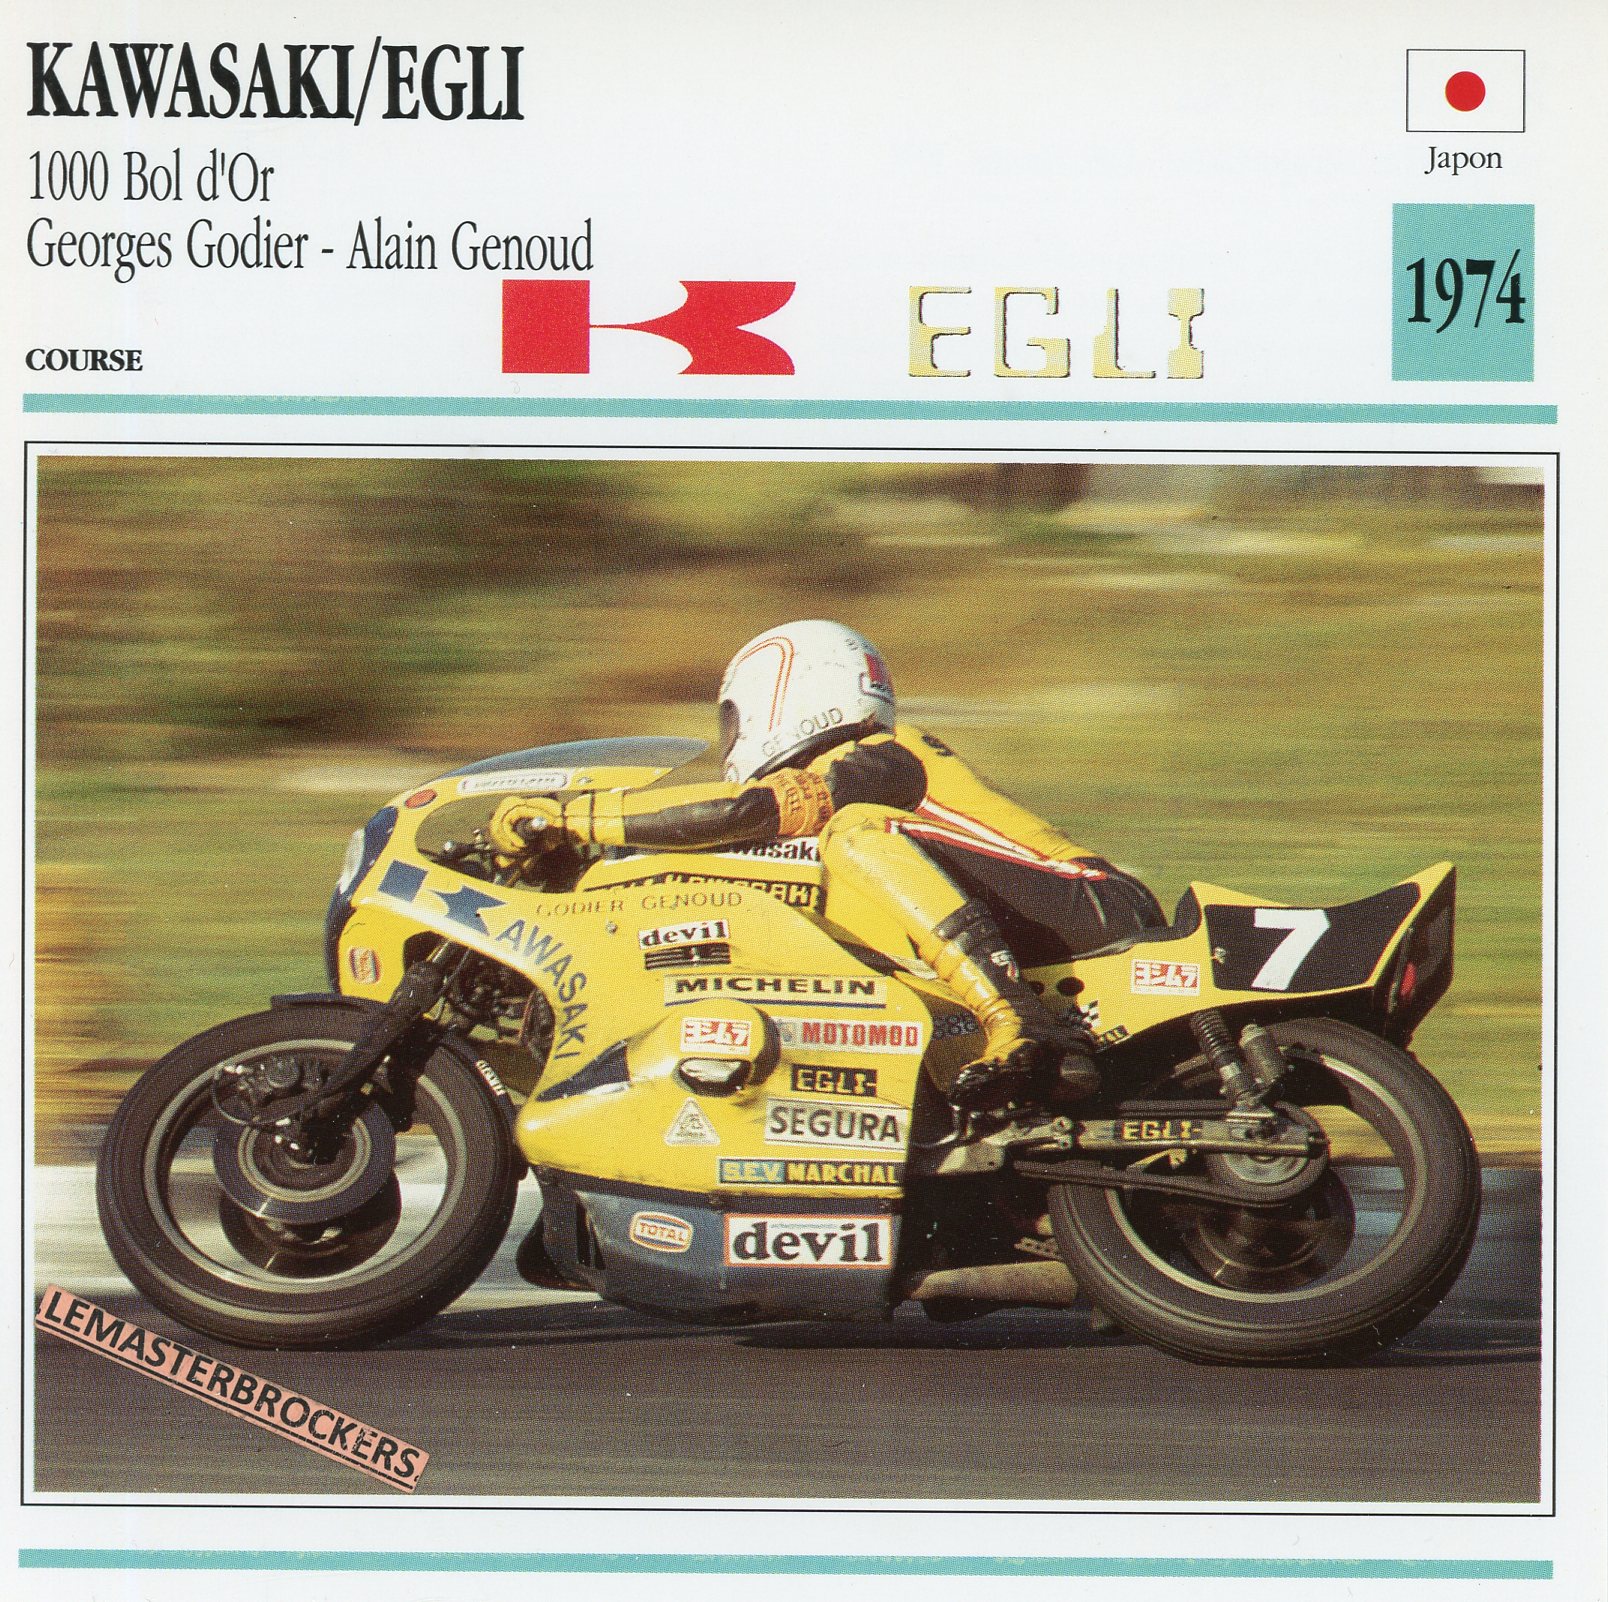 KAWASAKI-1000-BOL-D'OR-GODIER-GENOUD-EGLI-1974-FICHE-MOTO-KAWA-LEMASTERBROCKERS